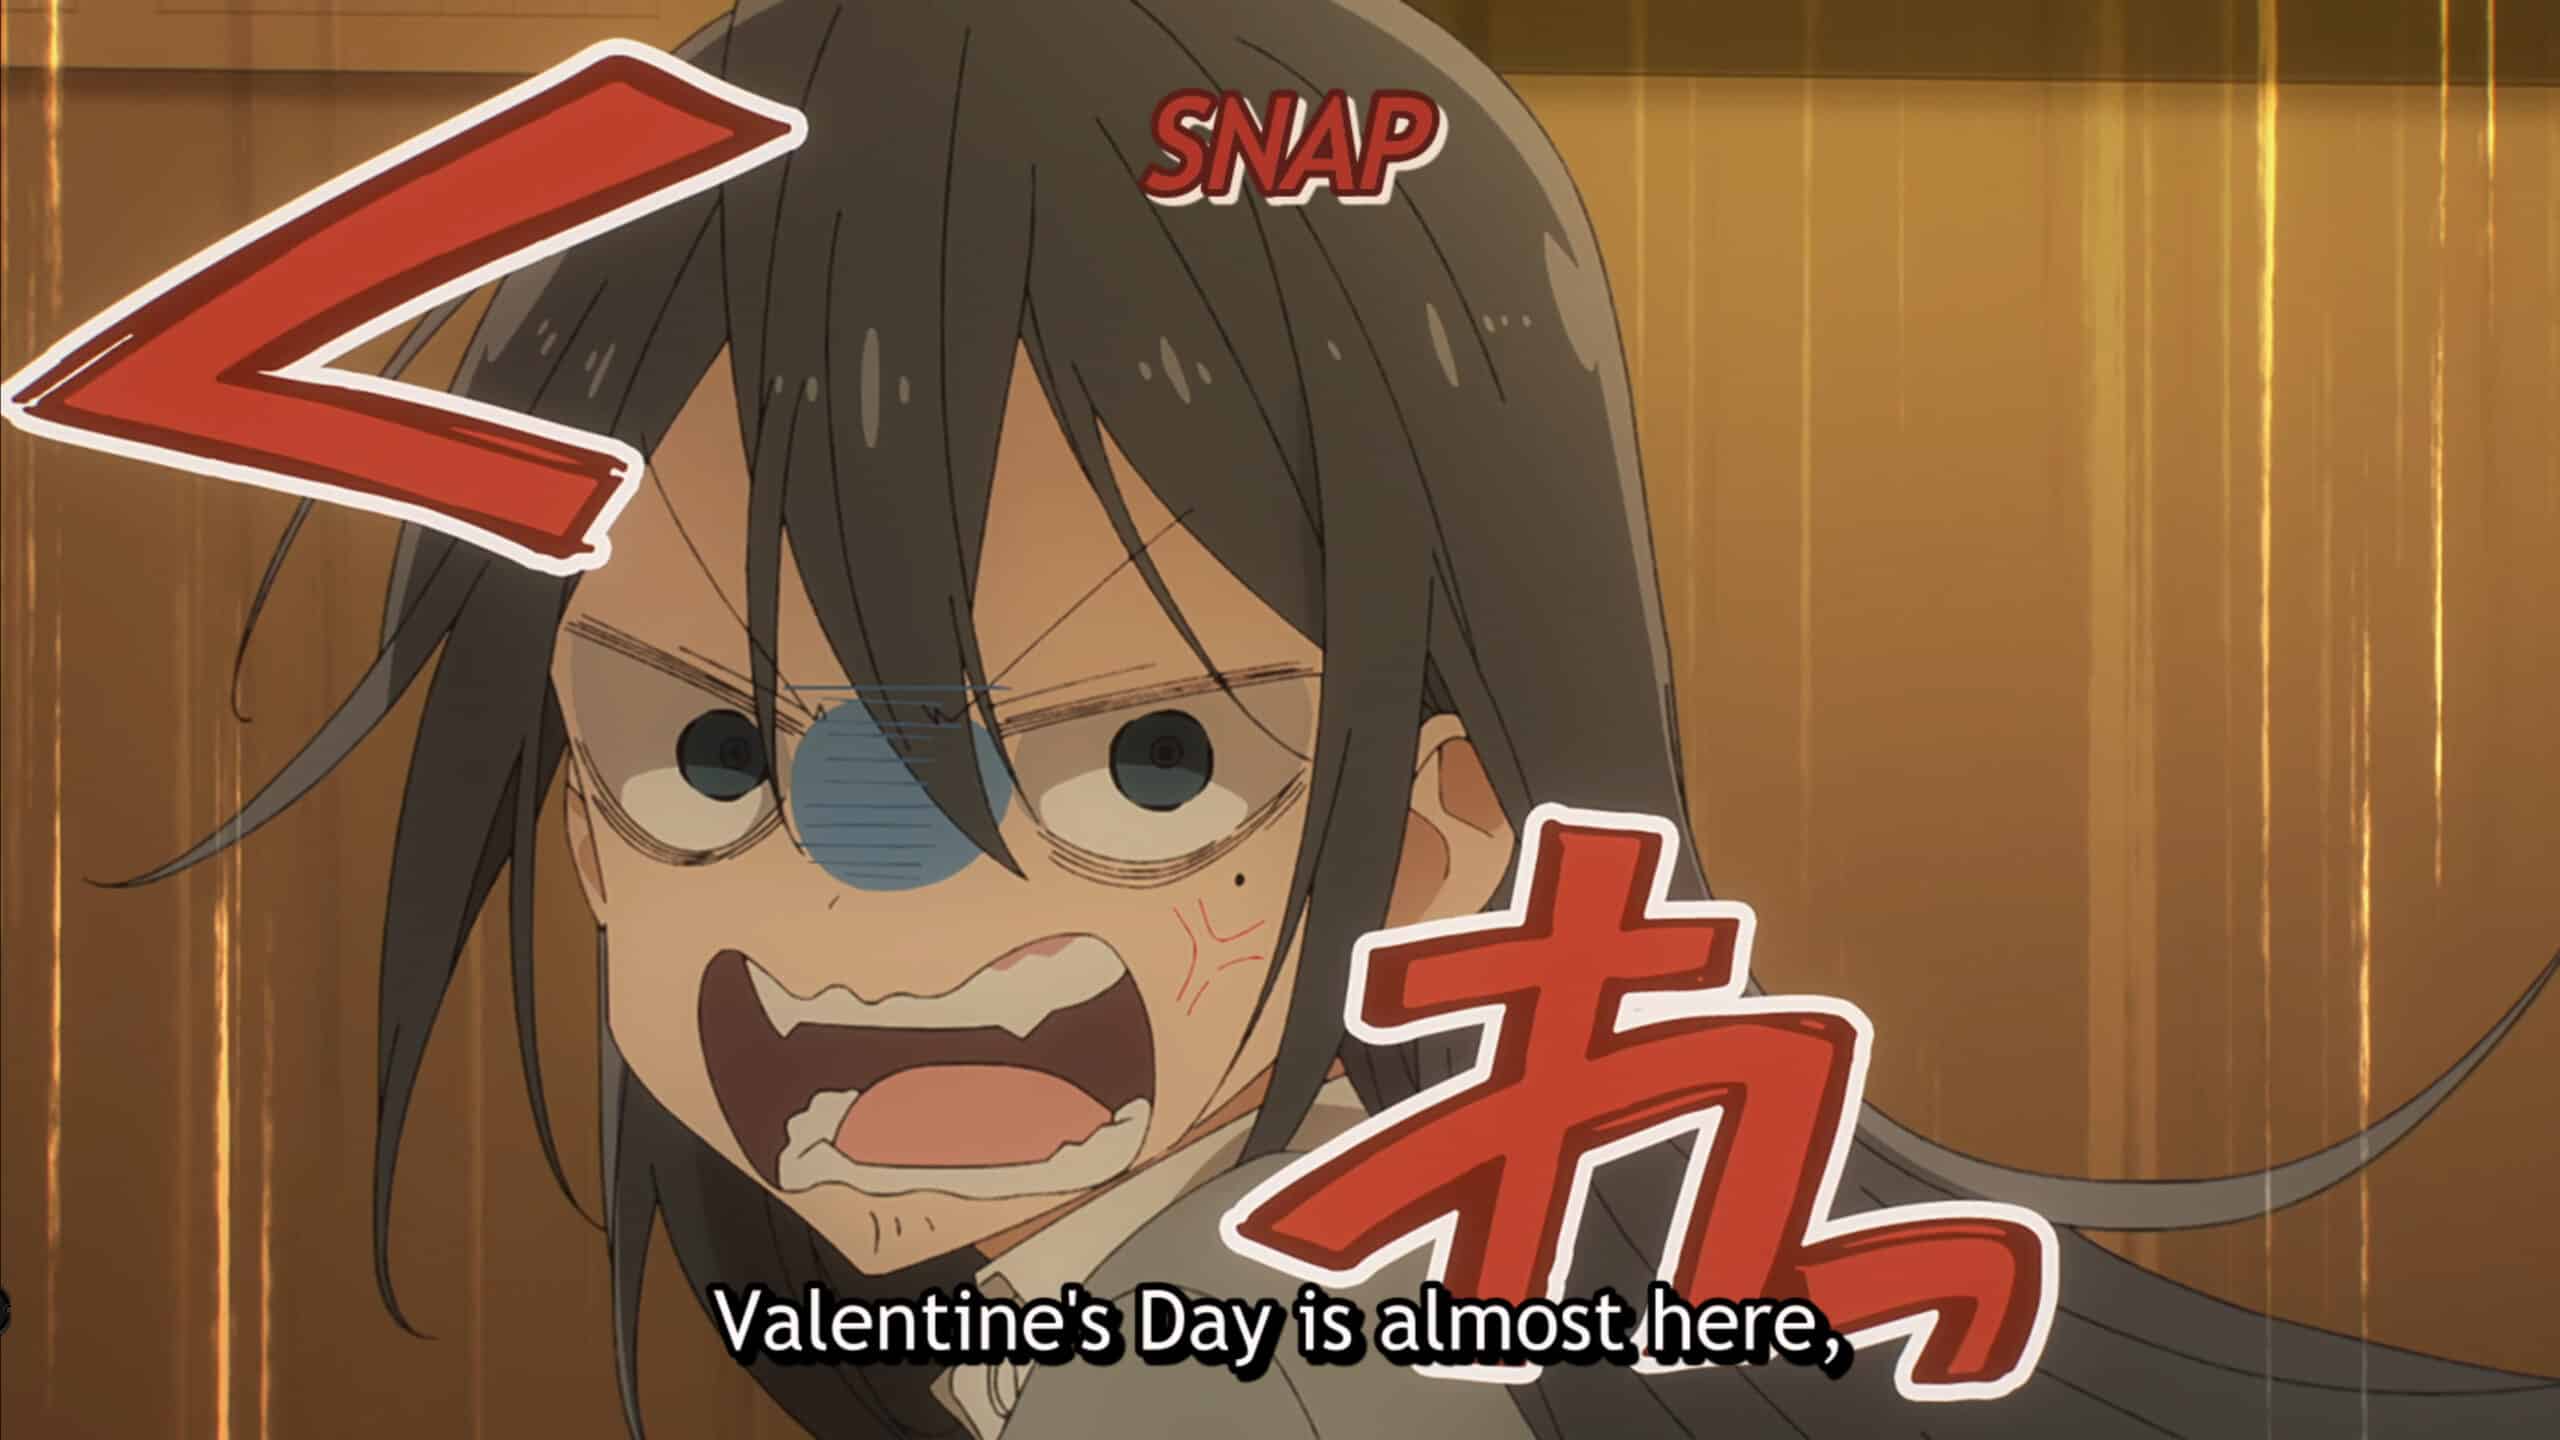 Sawada (Momo Asakura) noting Valentine's Day is coming